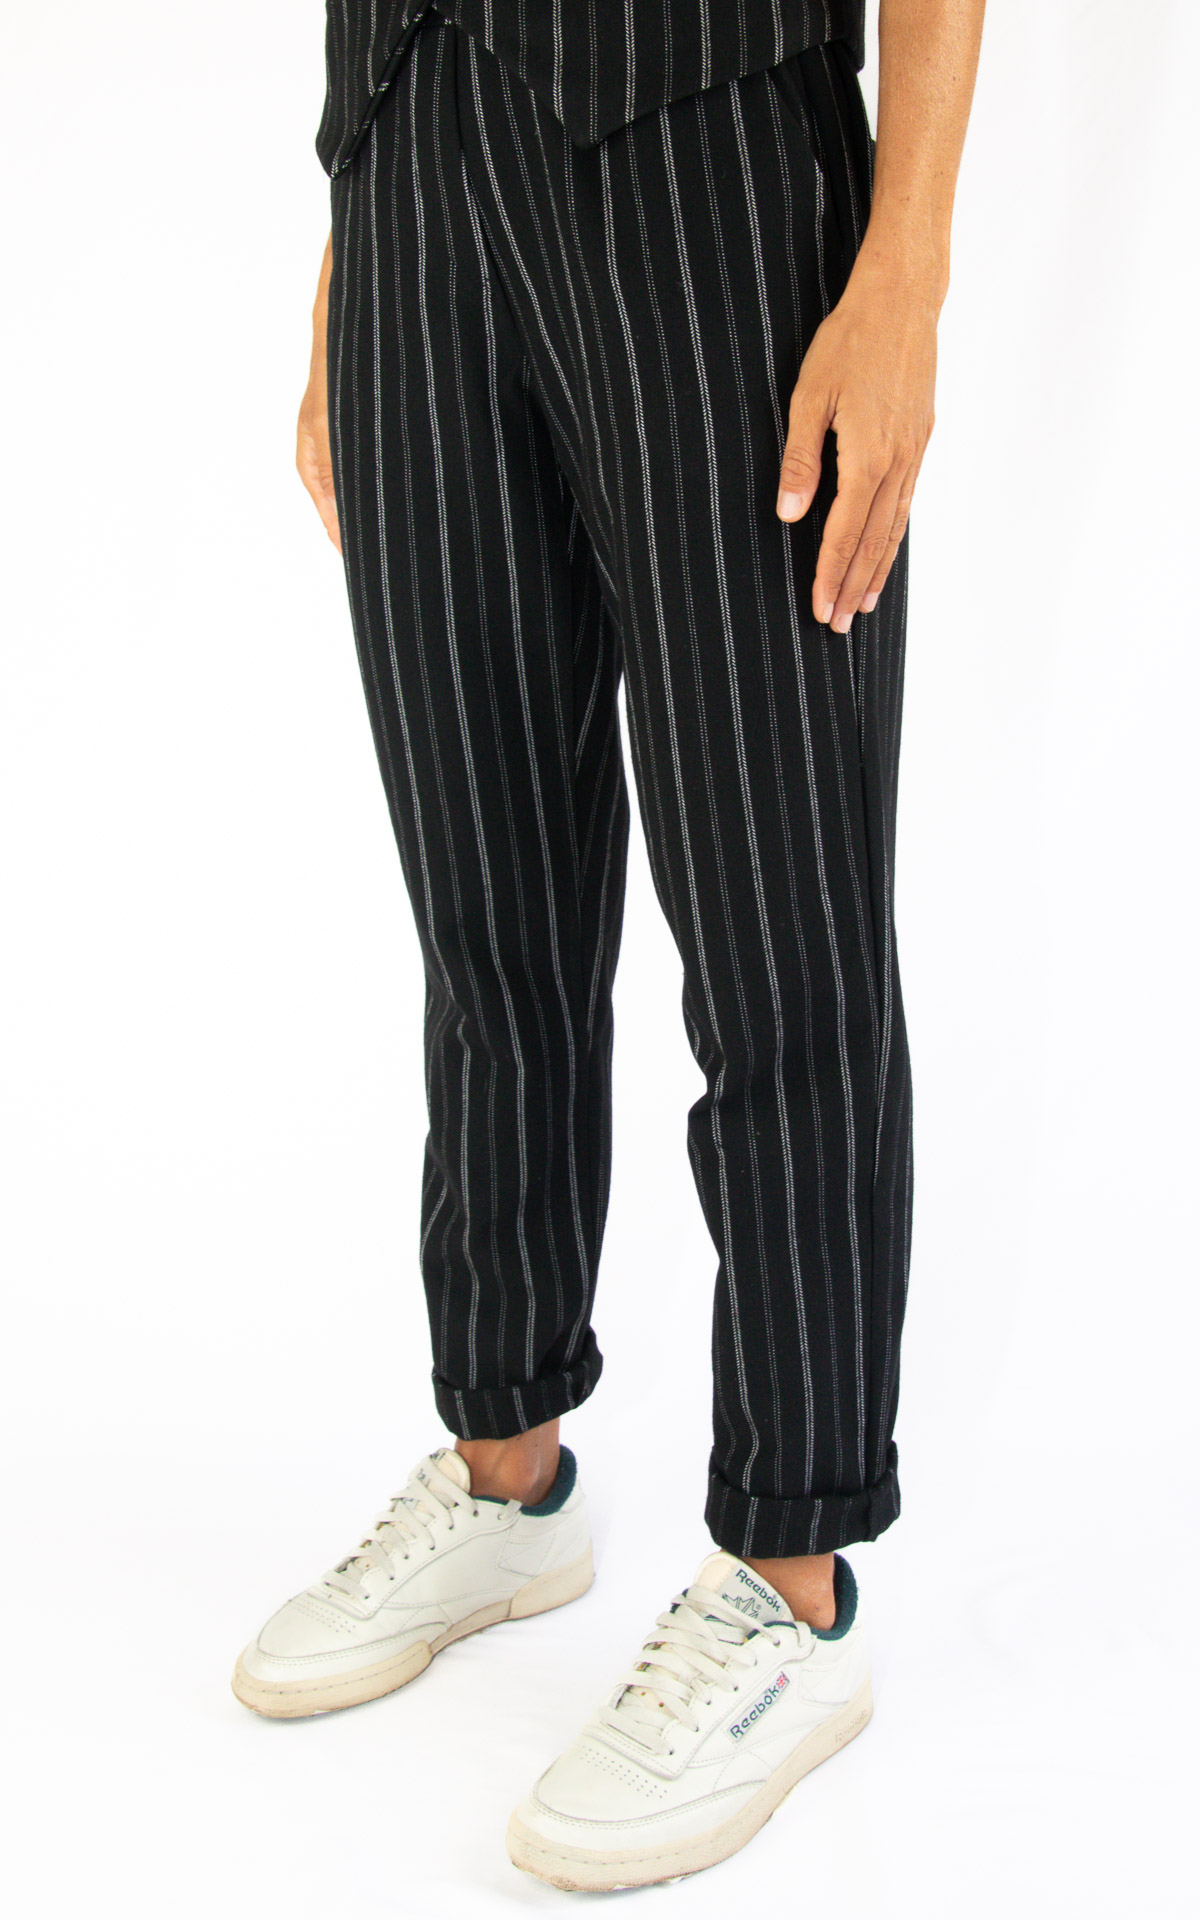 Initial - pantalone micro riga - nero/bianco